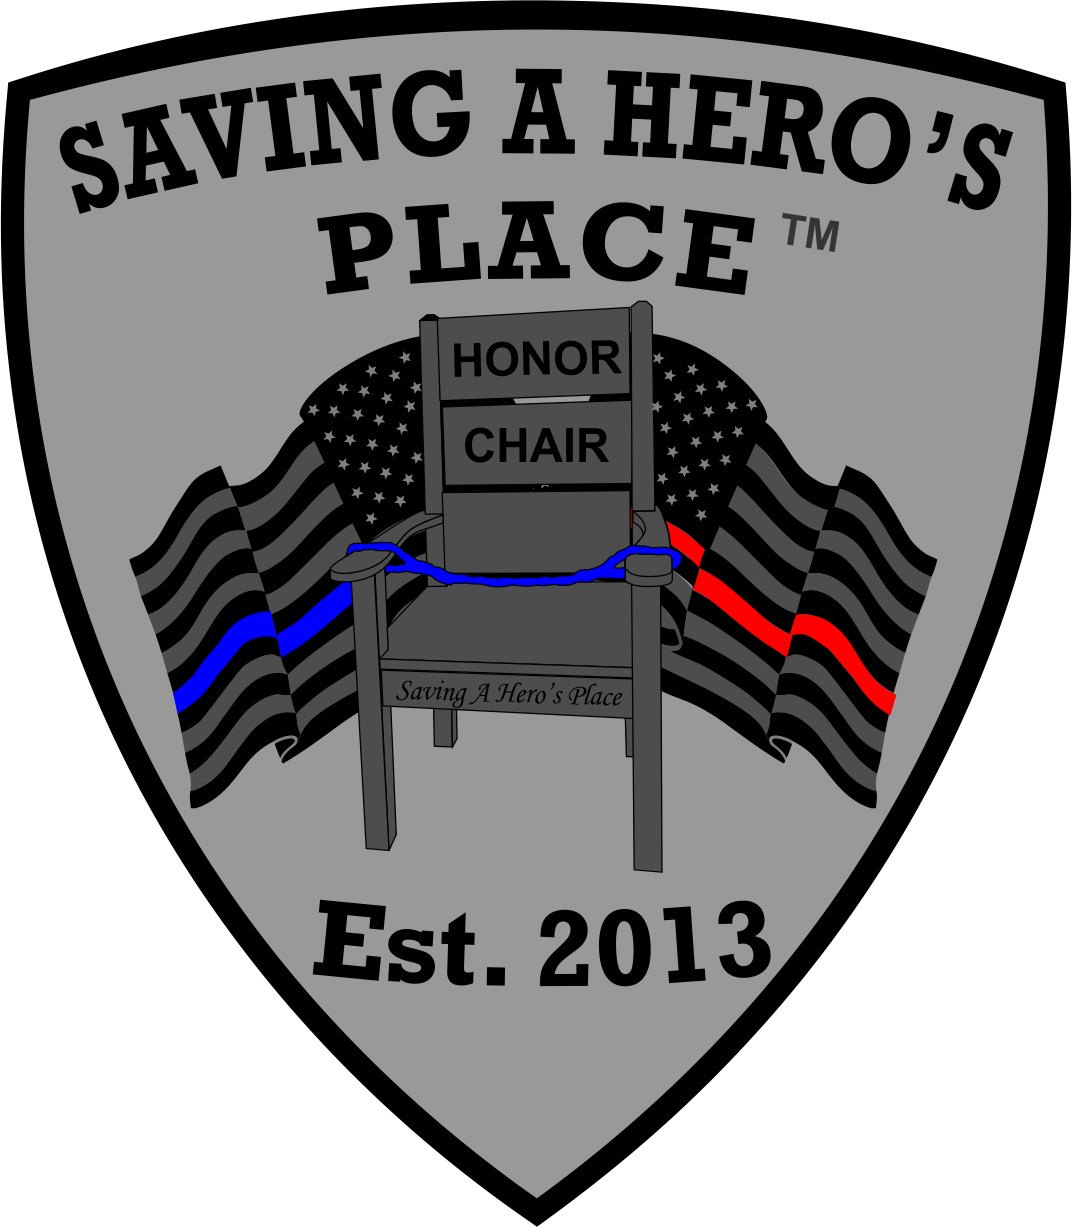 Saving A Hero's Place logo